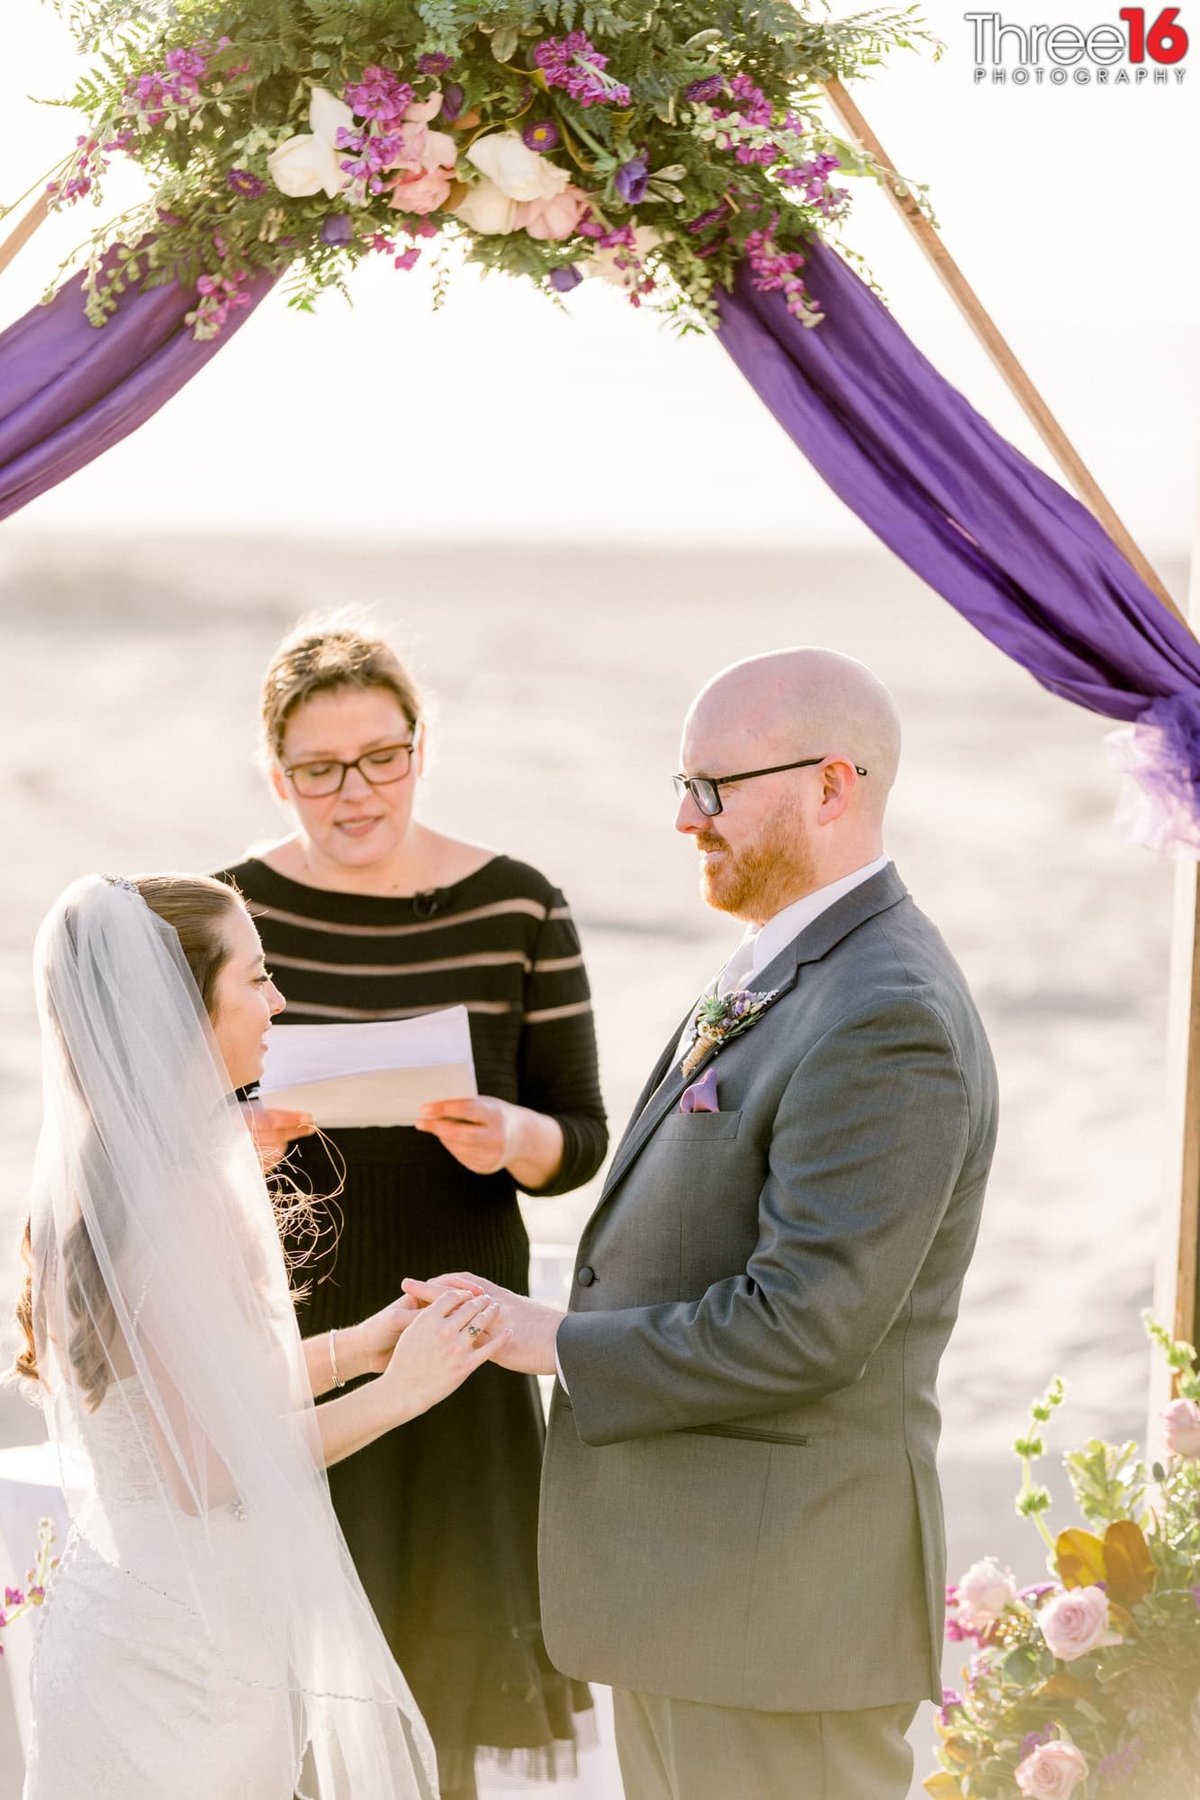 Wedding Vows at the Beach